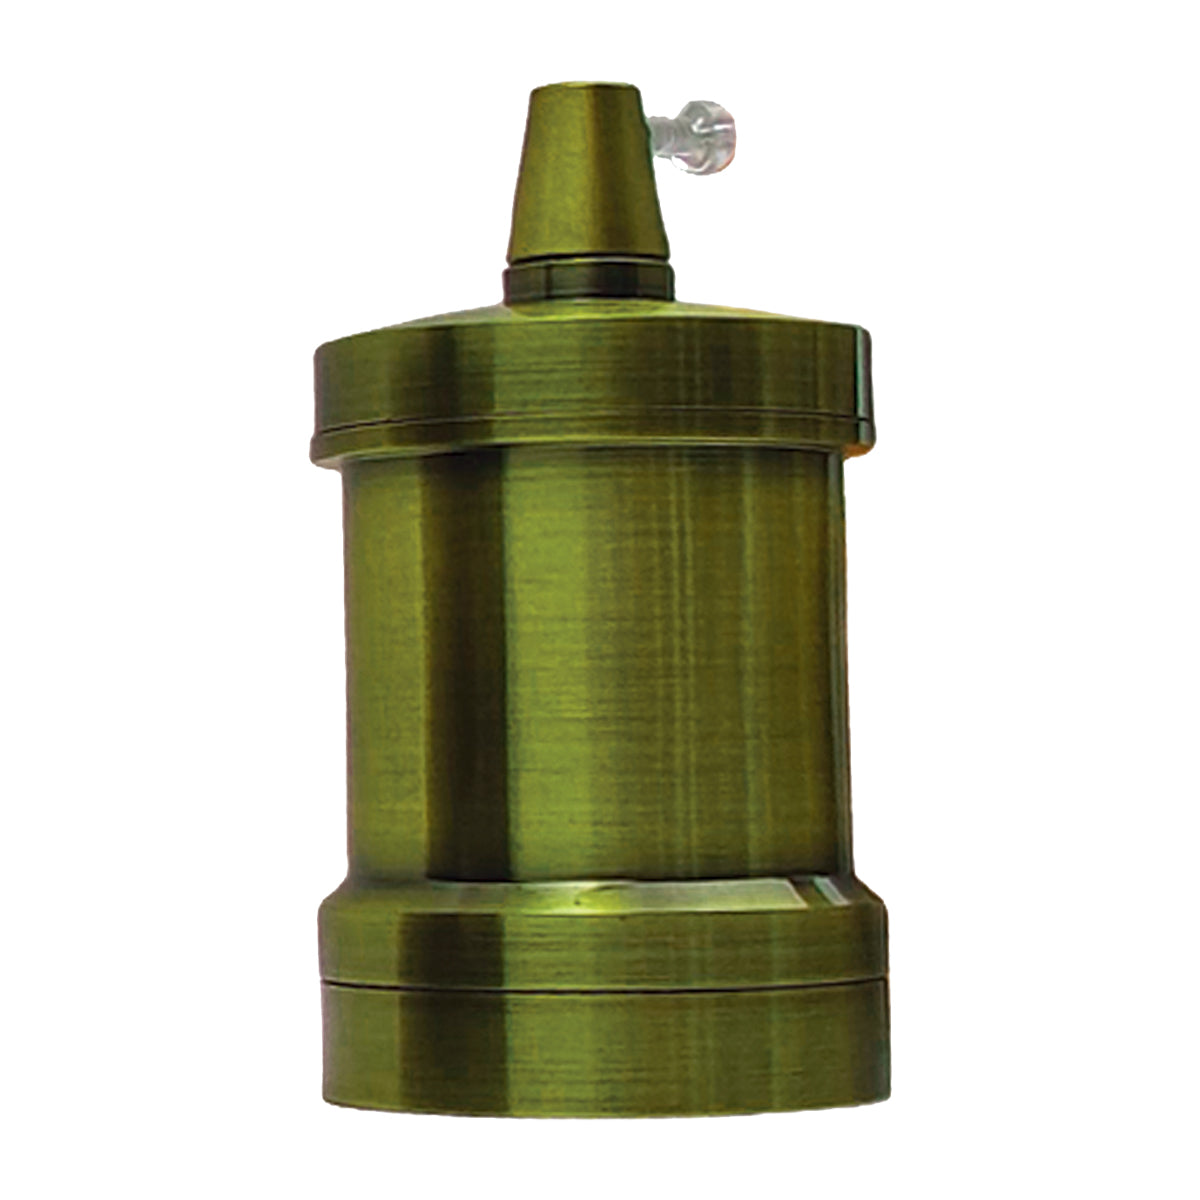 Green brass E27 Lamp holder